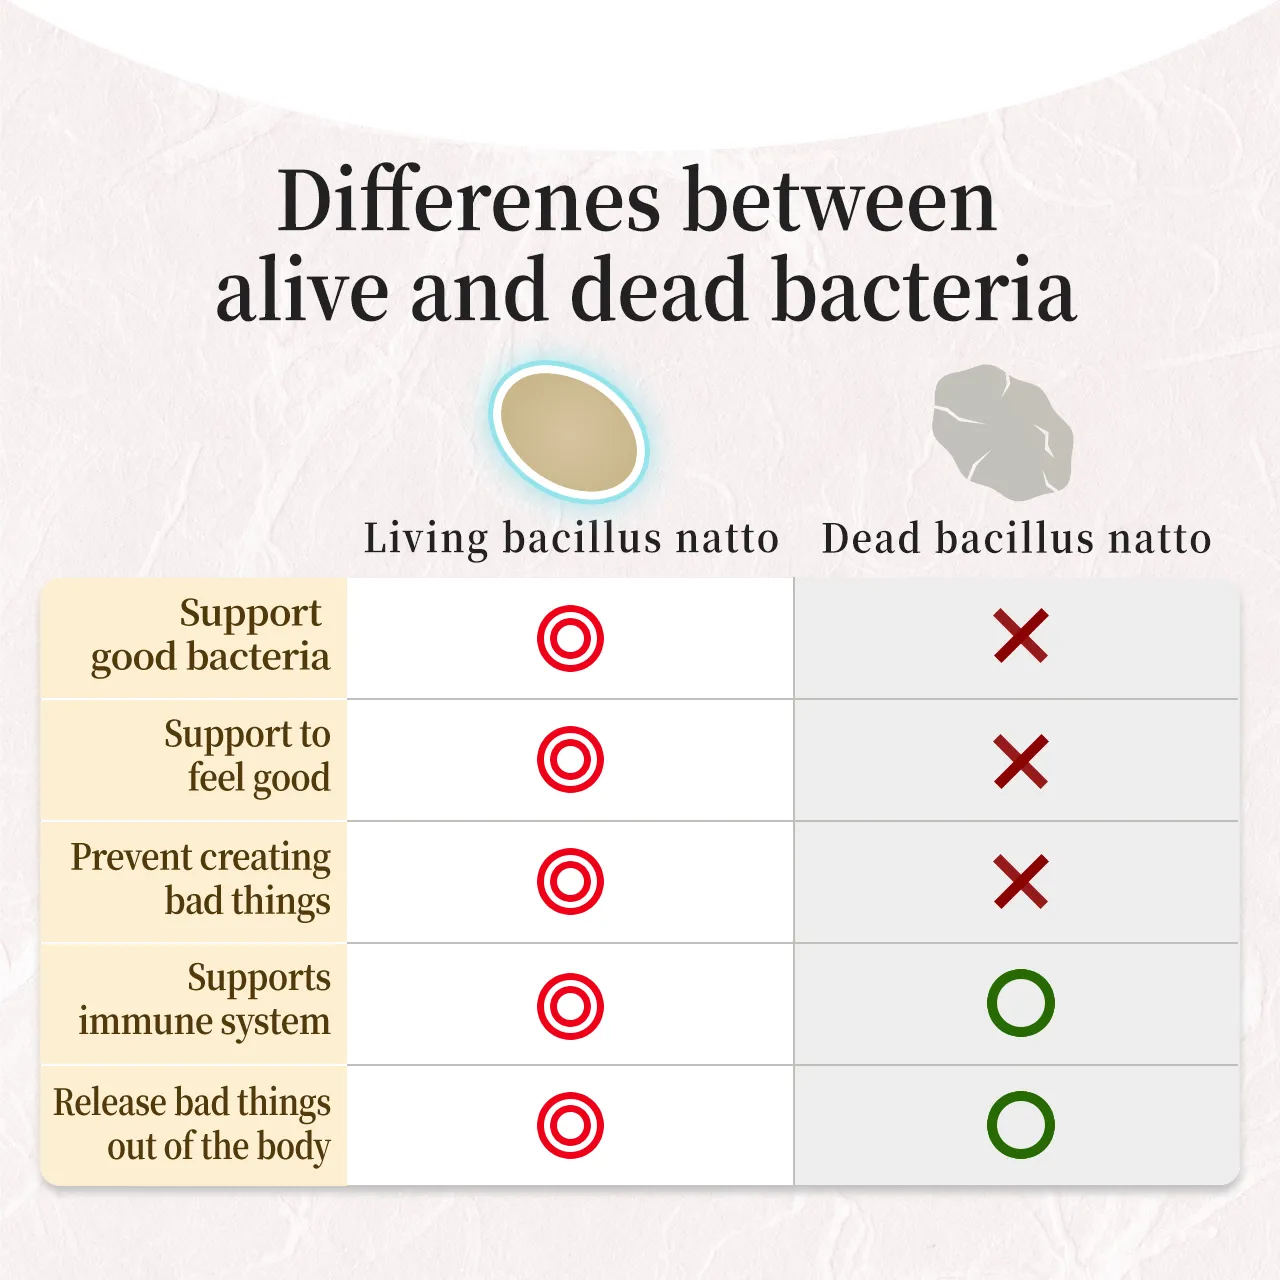 Comparison between living natto bacteria and dead natto bacteria